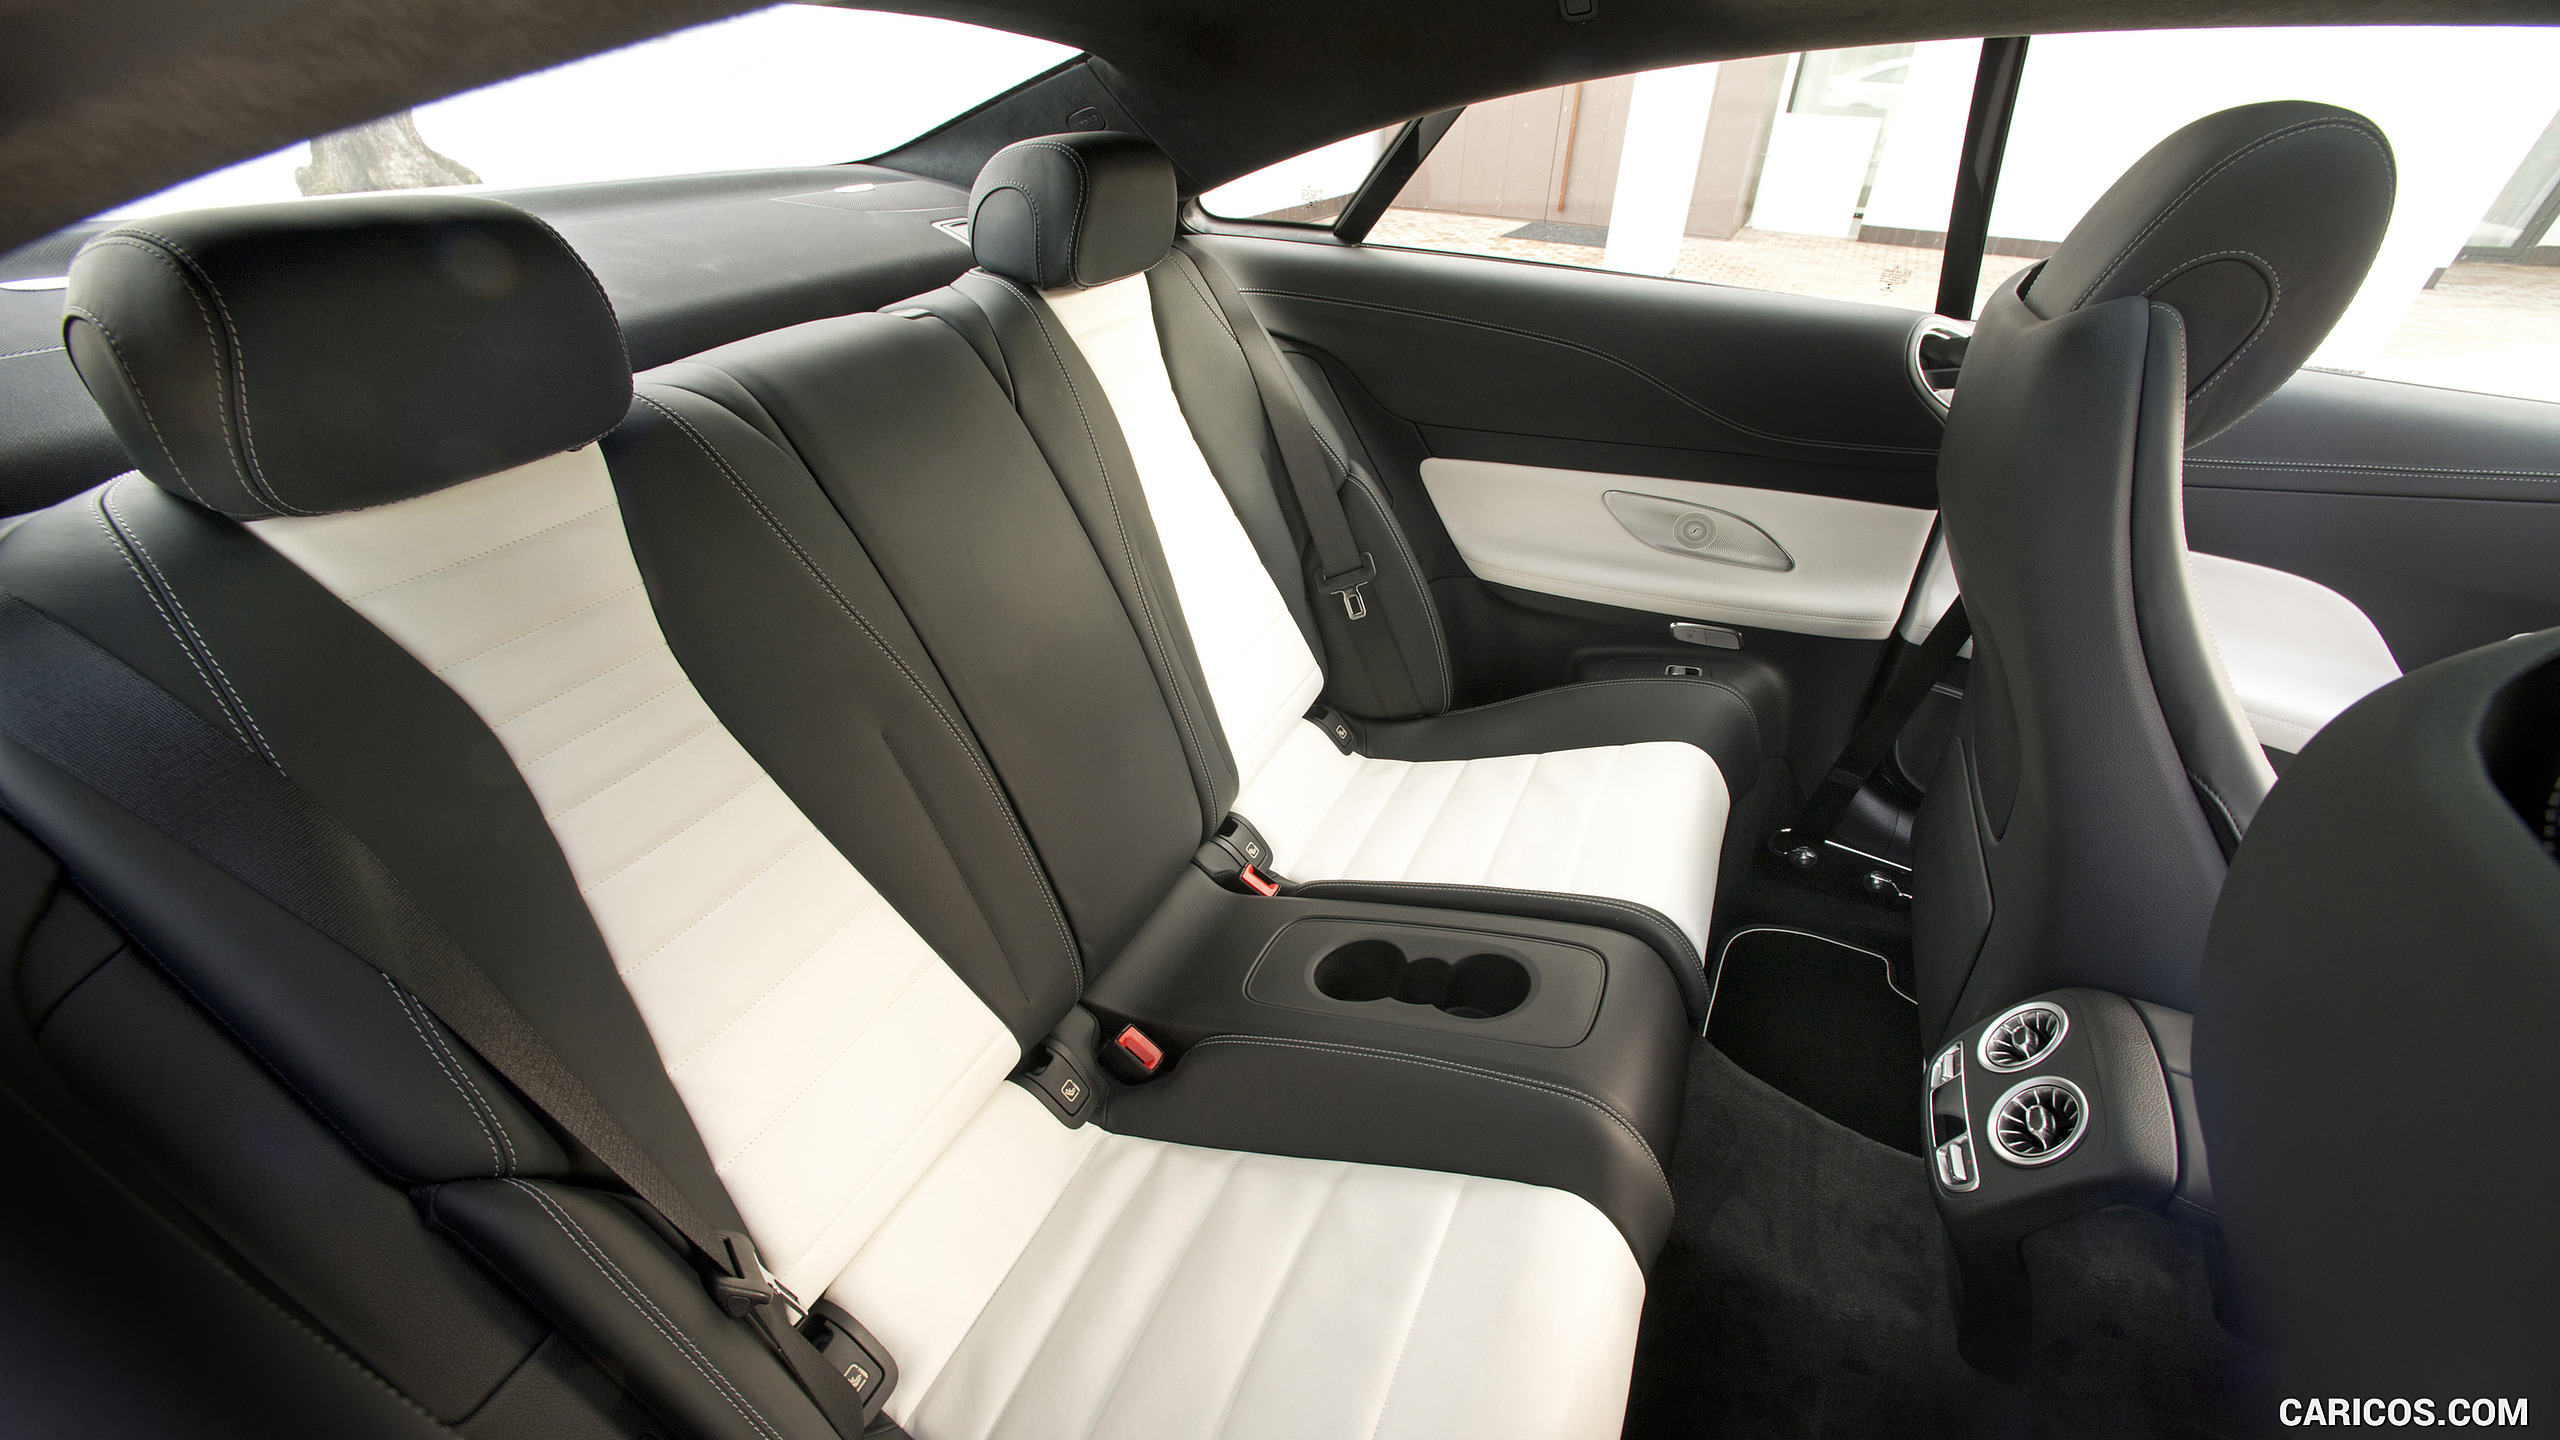 2018 Mercedes-Benz E400 Coupe 4MATIC - Interior, Rear Seats, #168 of 365